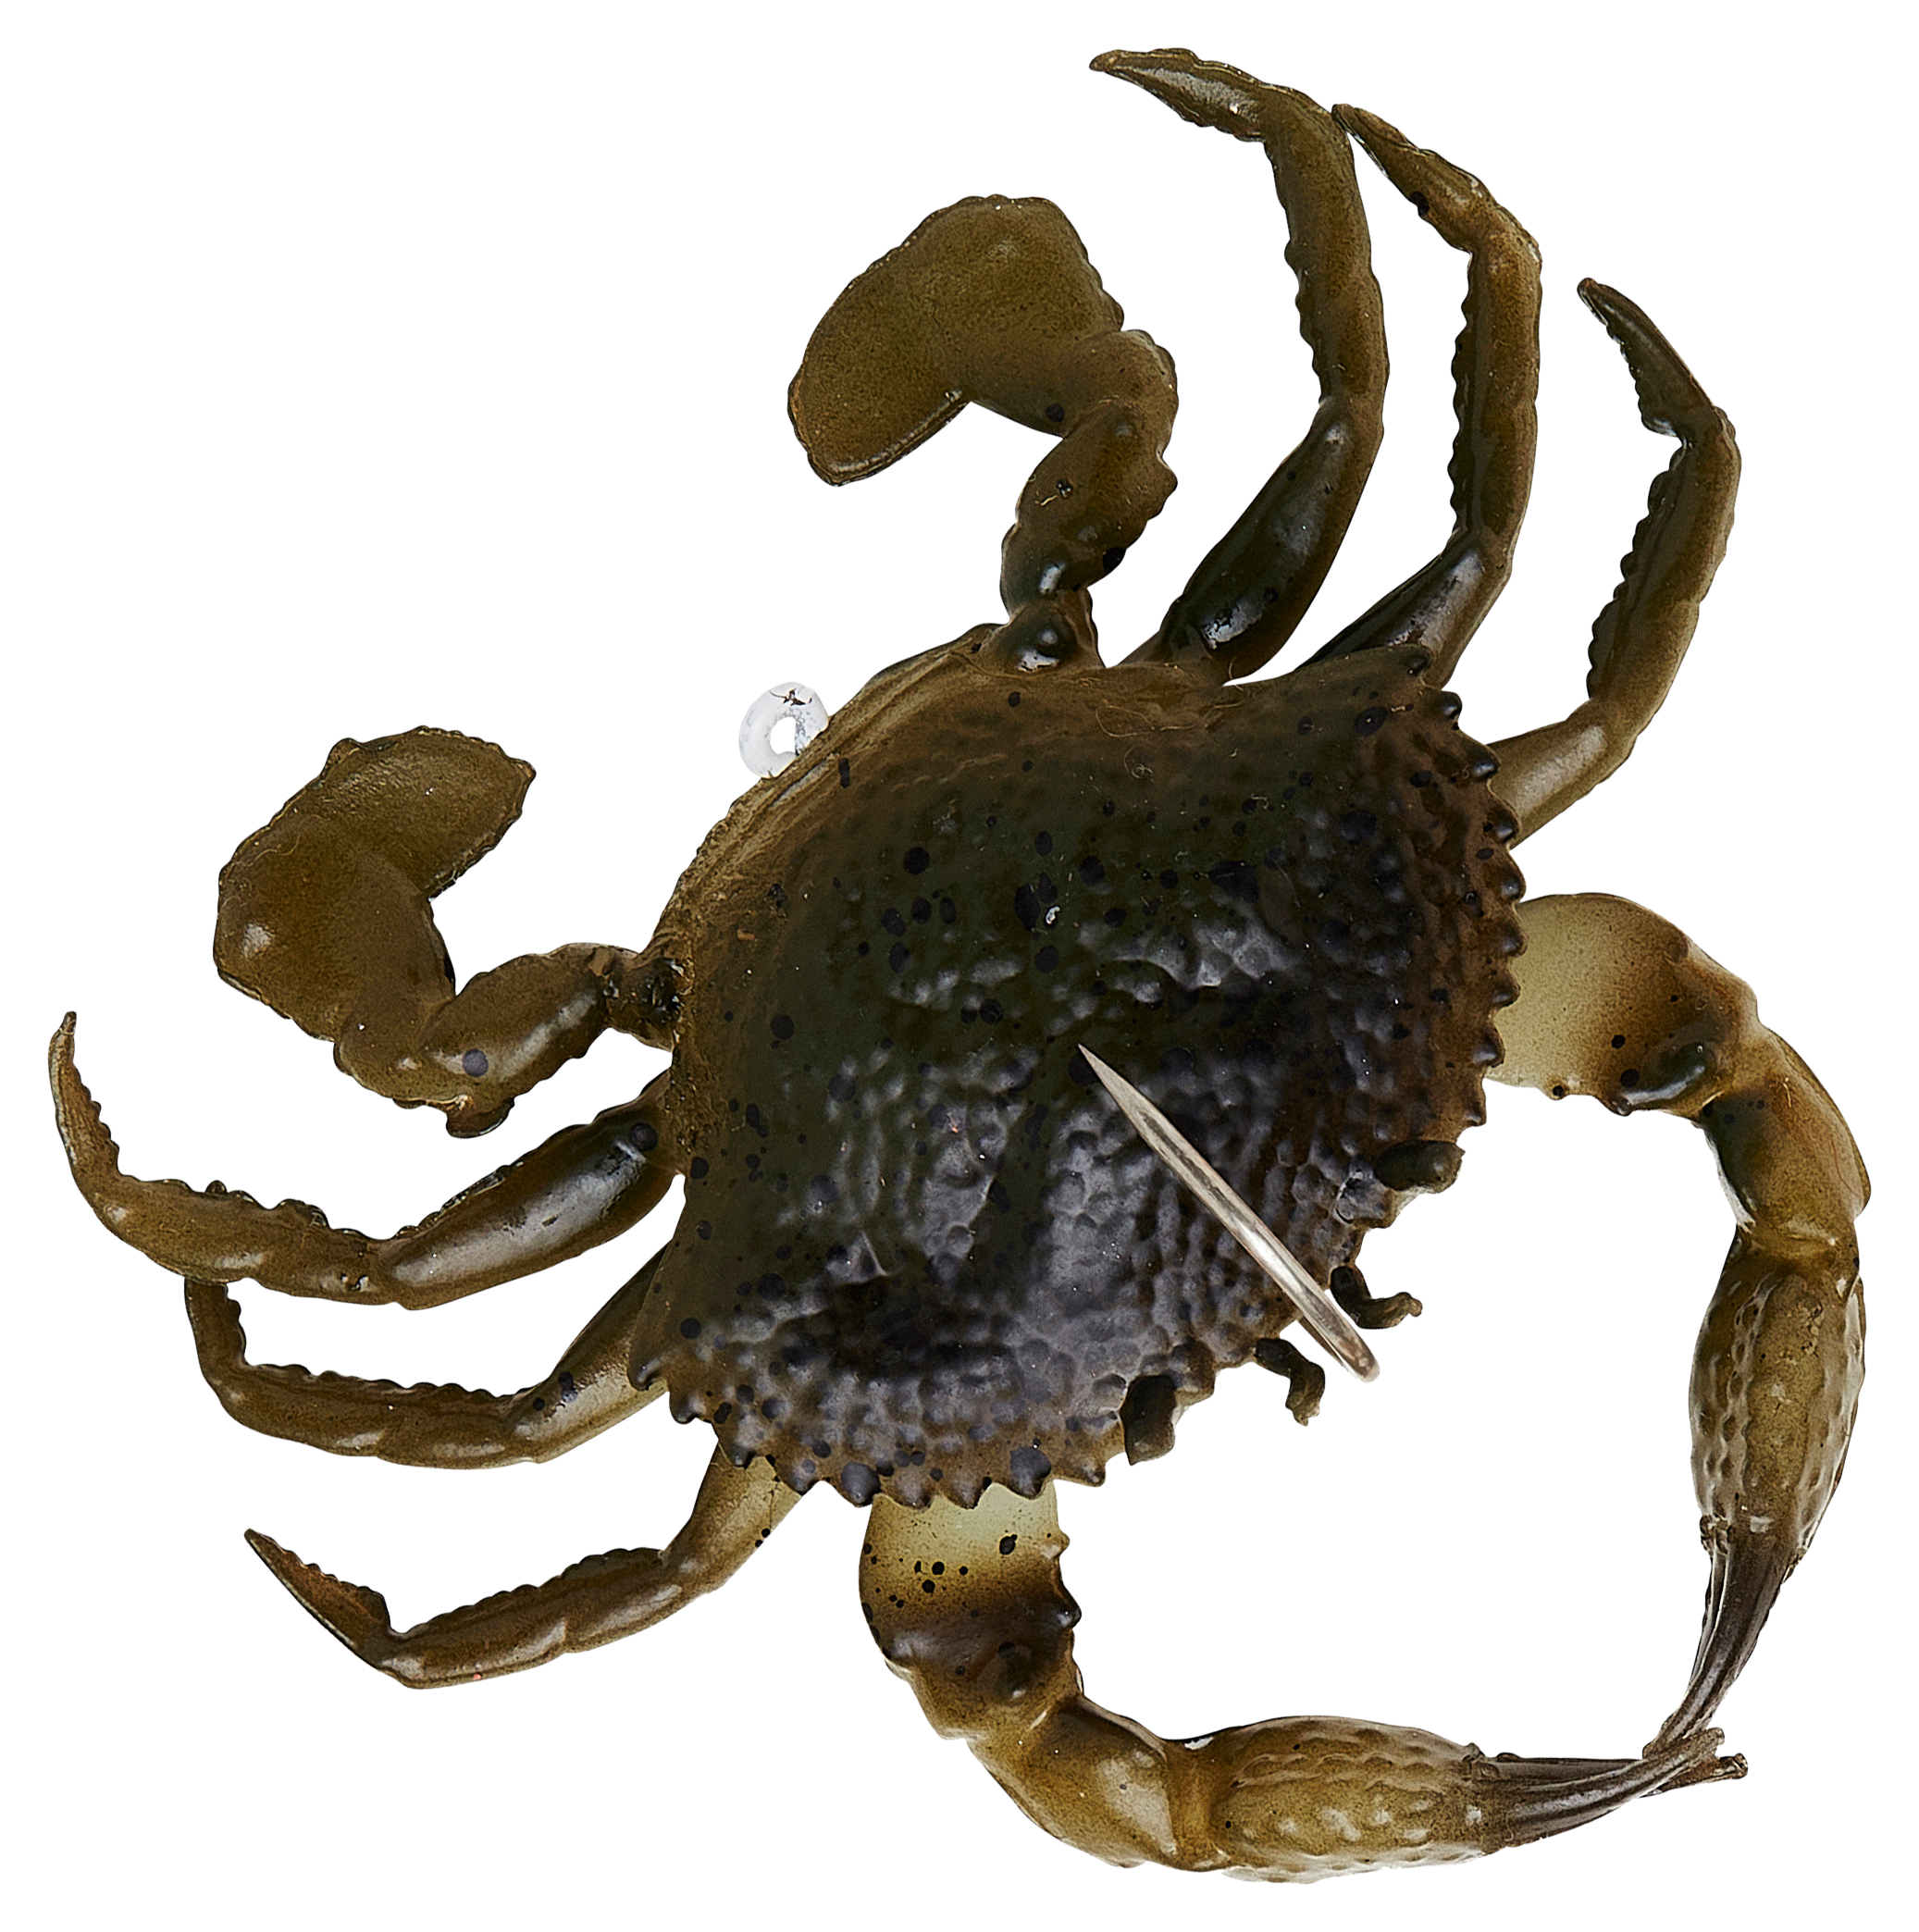 Savage Gear Duratech Crab